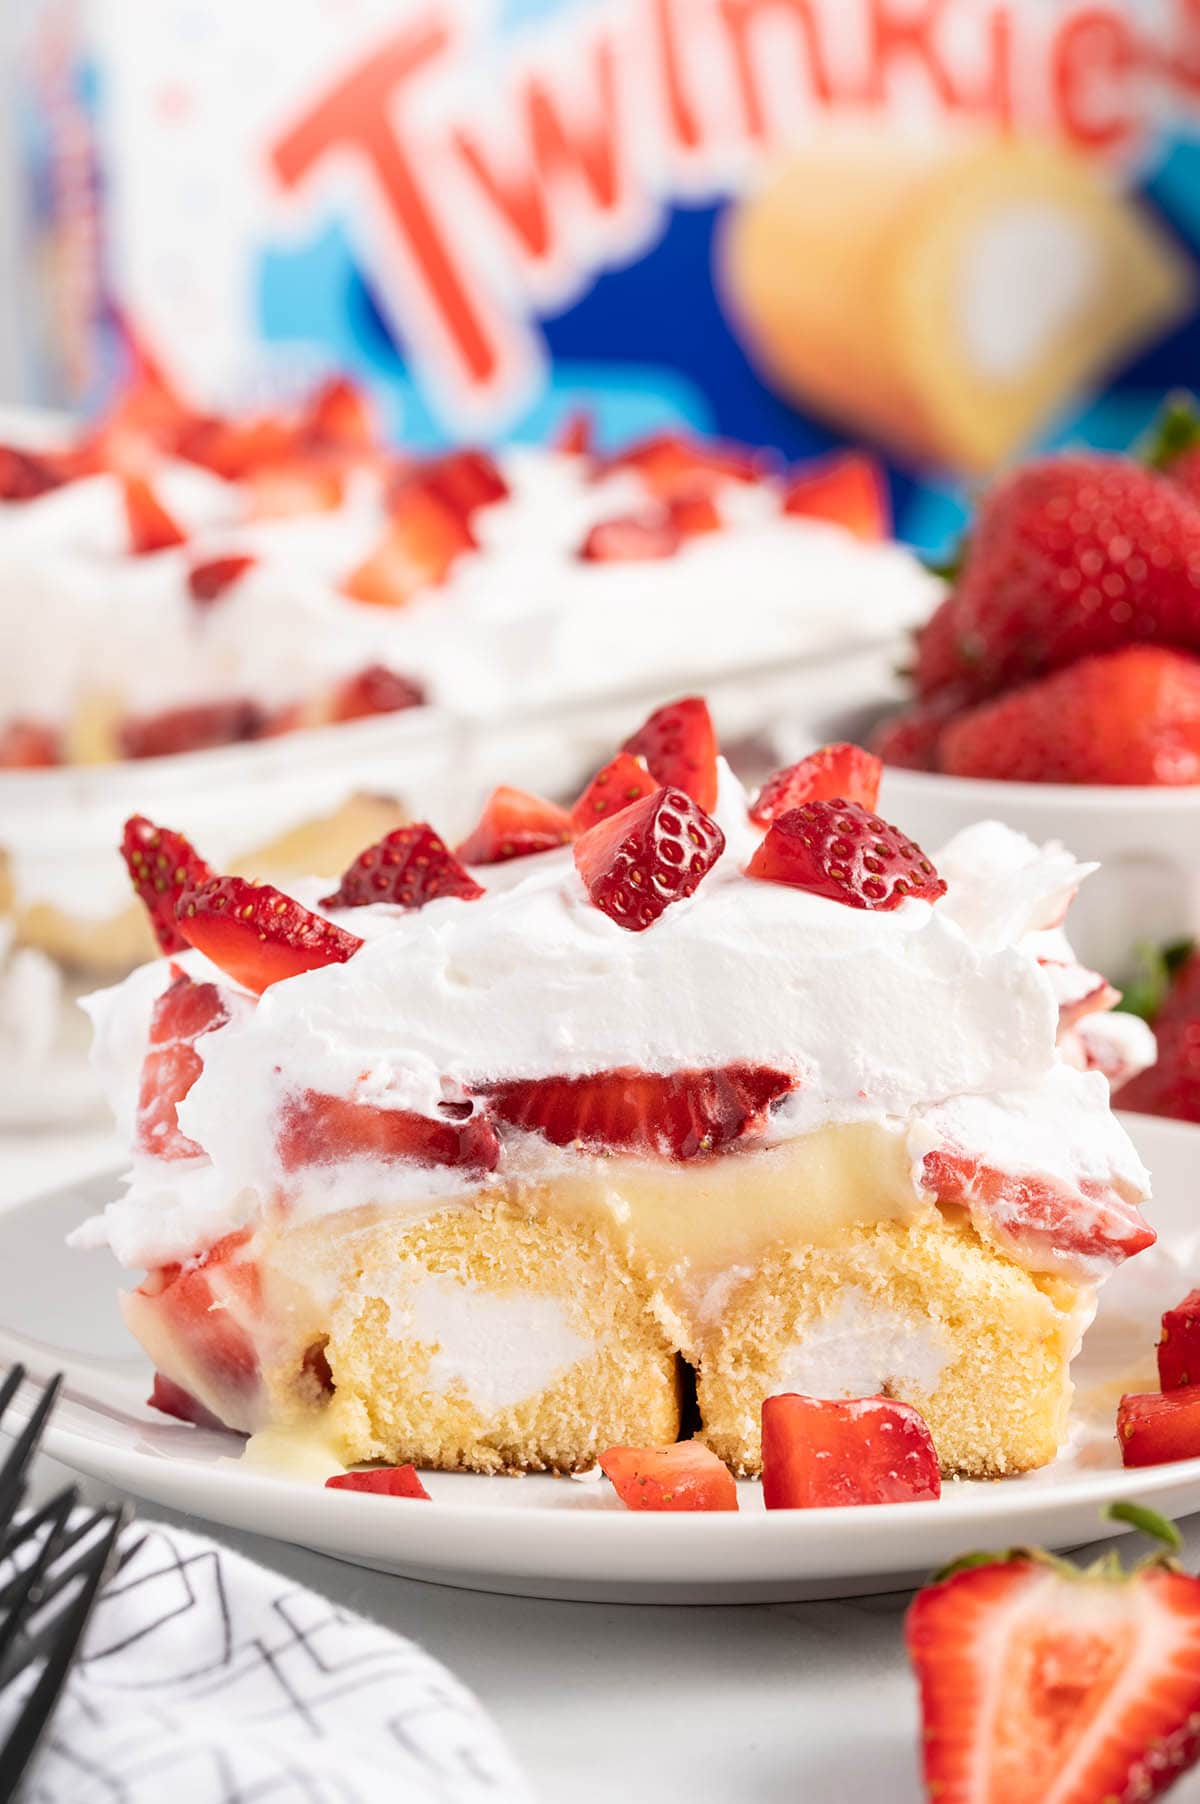 Twinkie Cake with strawberries